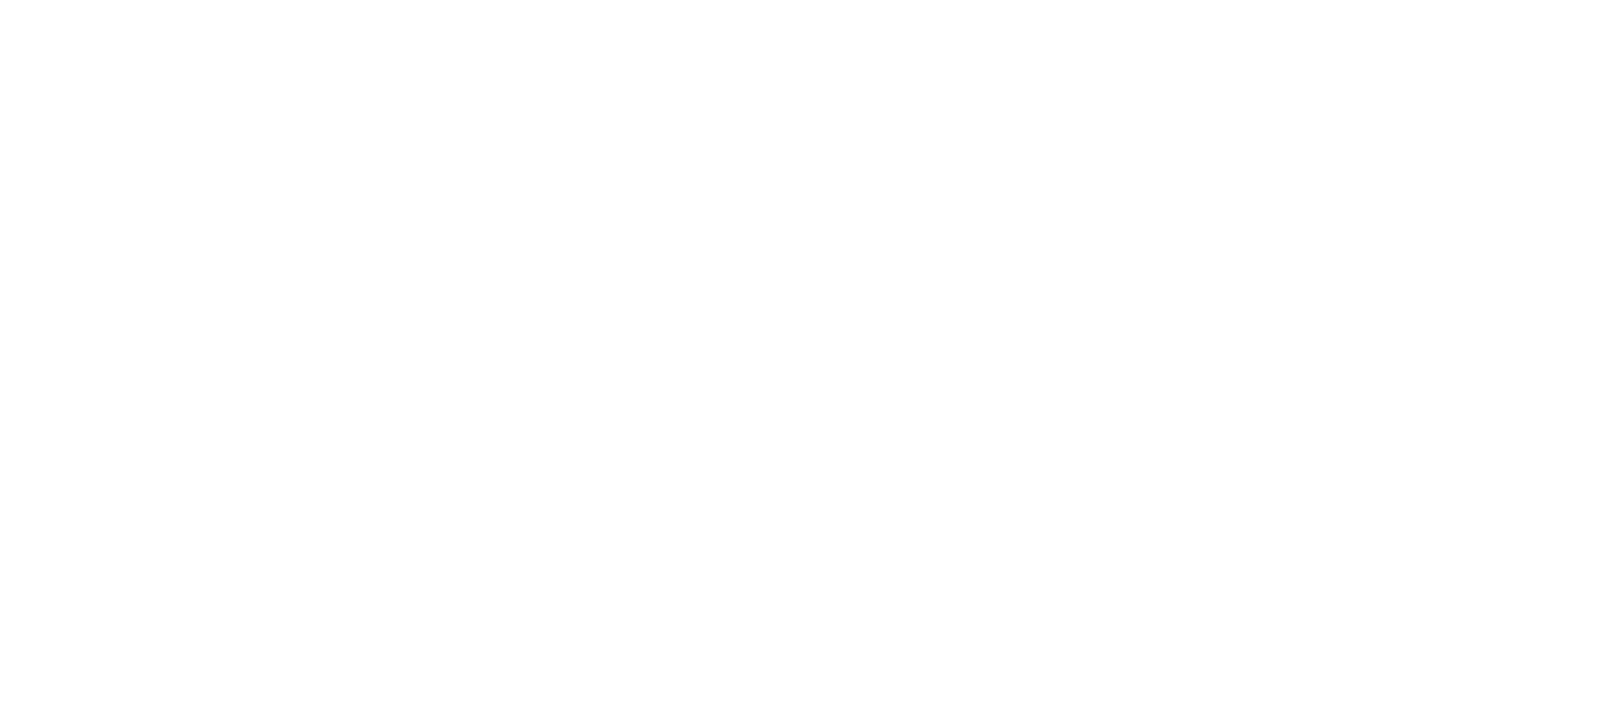 Minerva Foods Logo